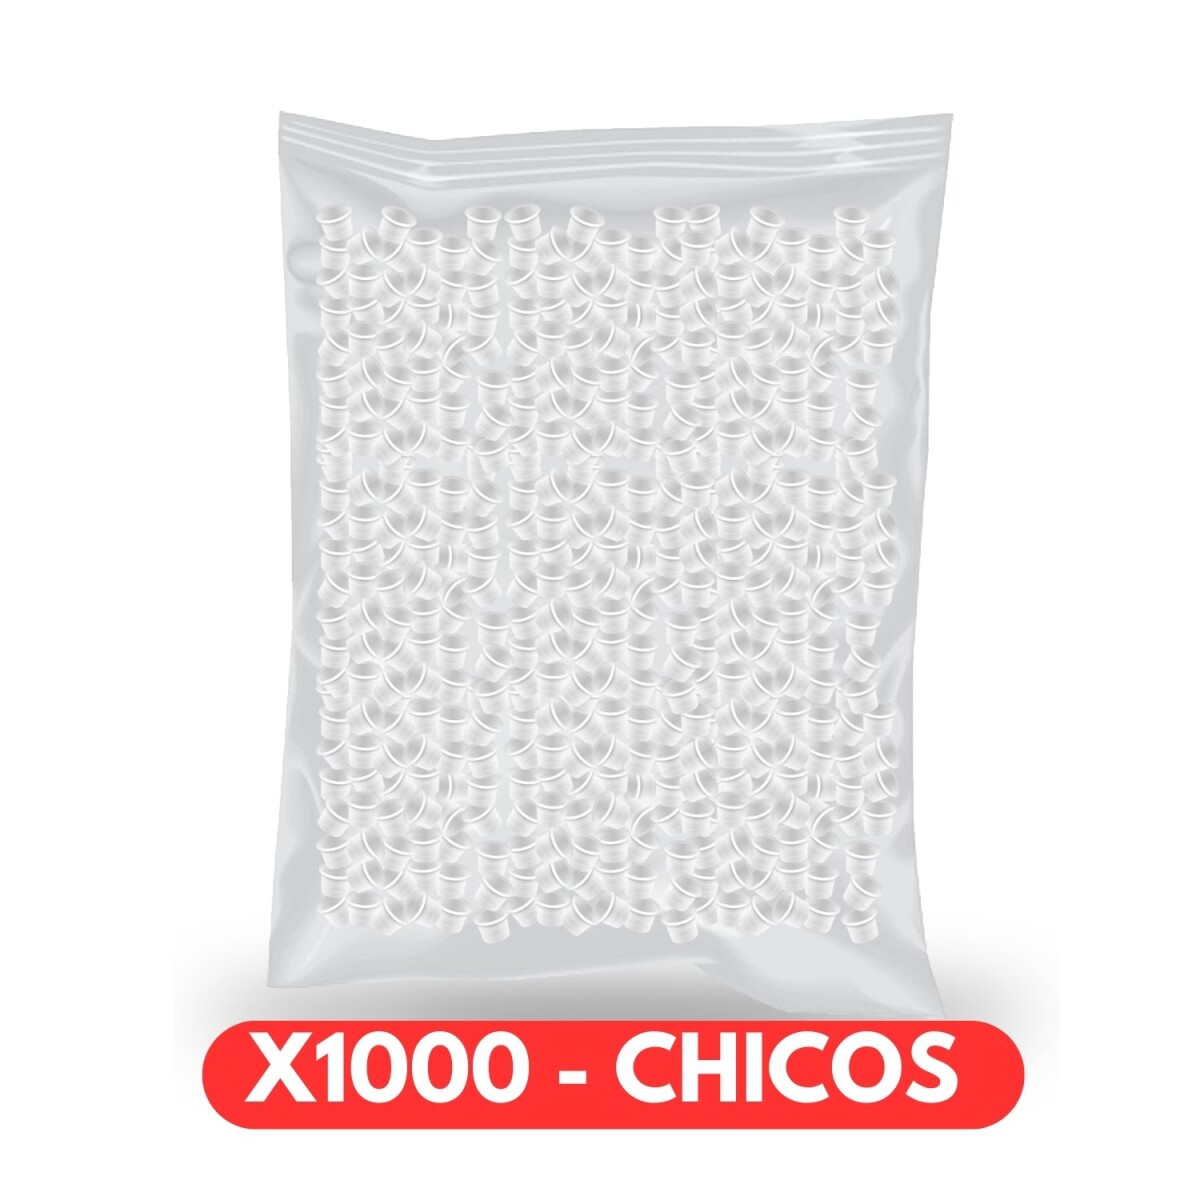 TETINES CHICOS BOLSA x 1000 